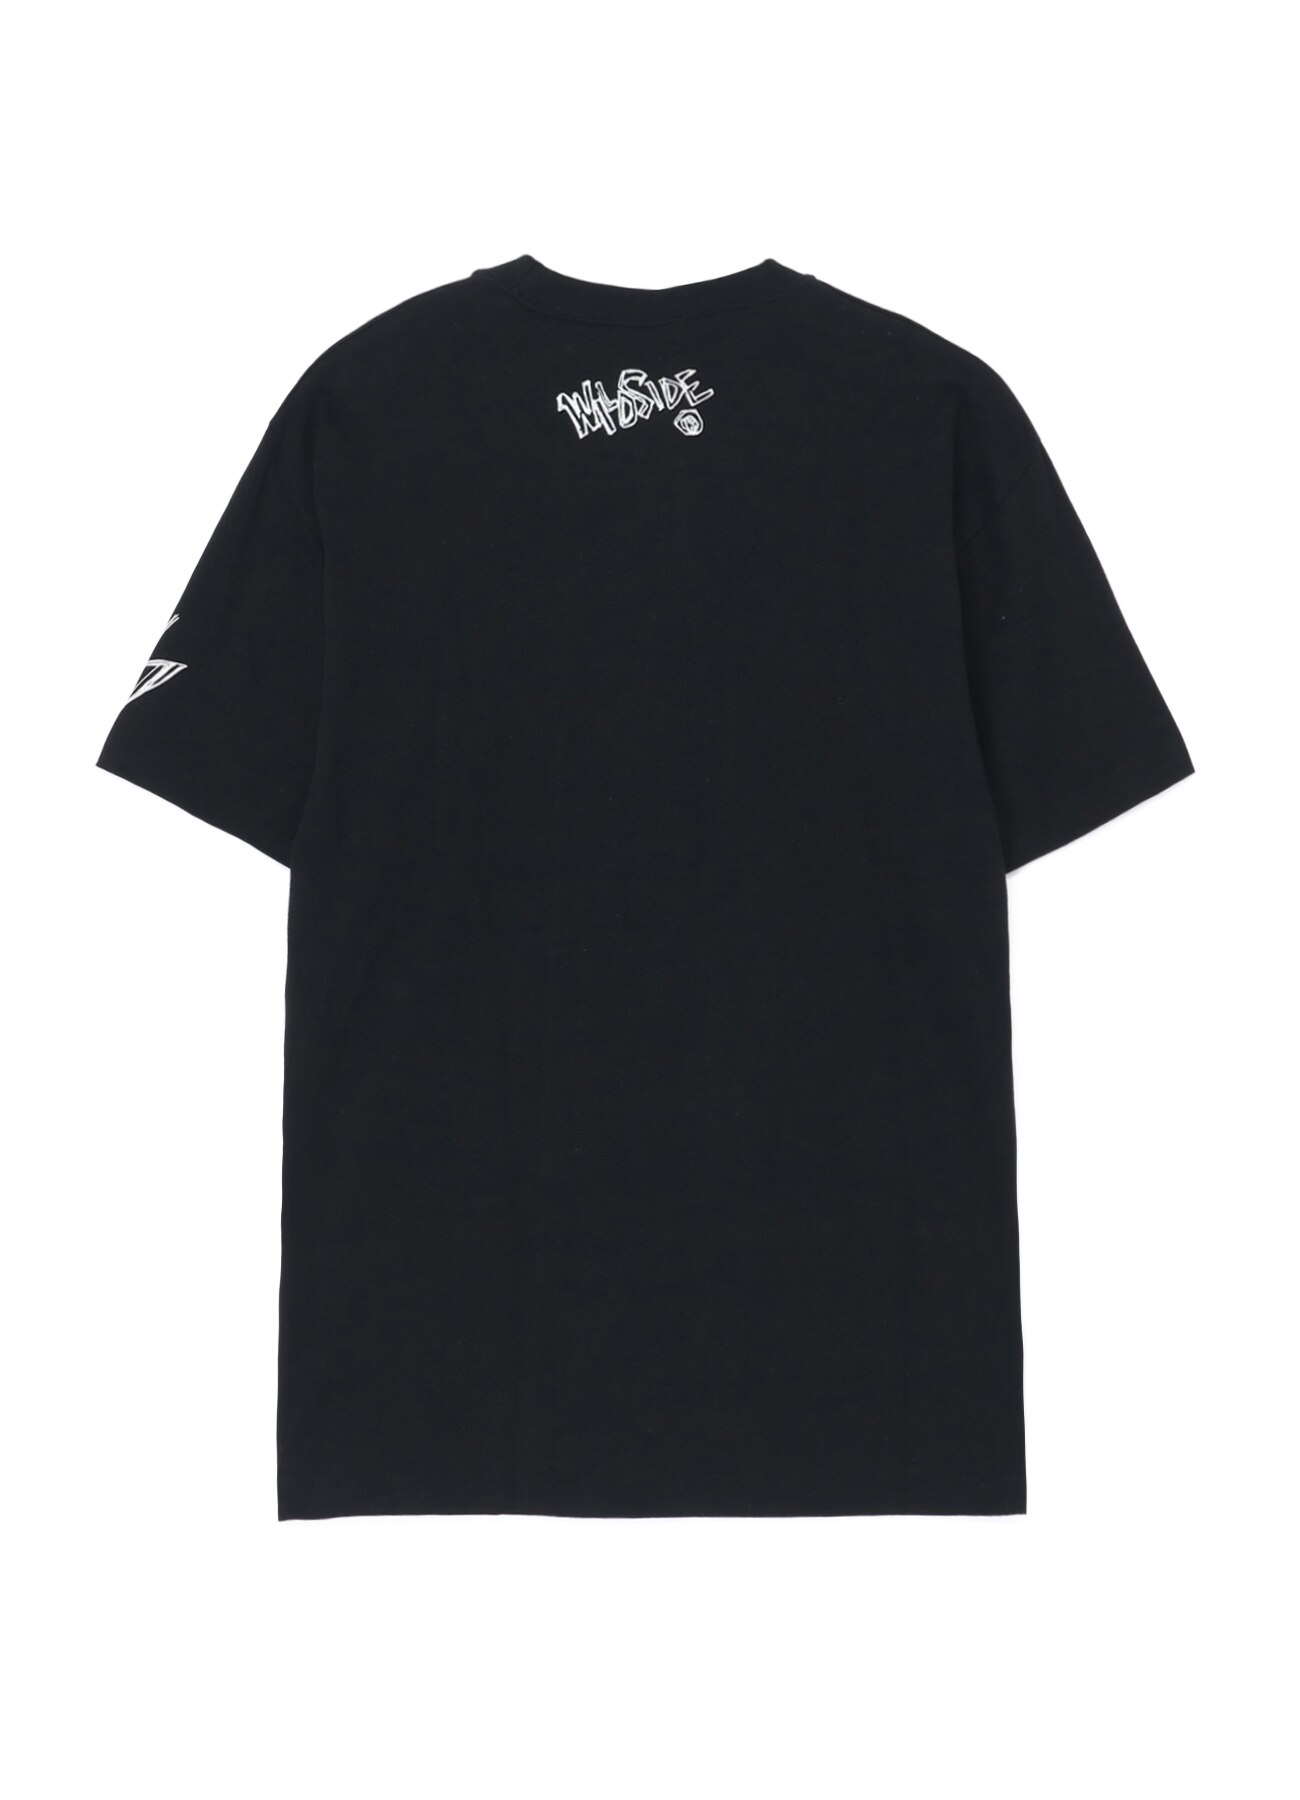 SHARK CROSSING T-shirt(M BLACK): YOHJI YAMAMOTO｜WILDSIDE YOHJI 